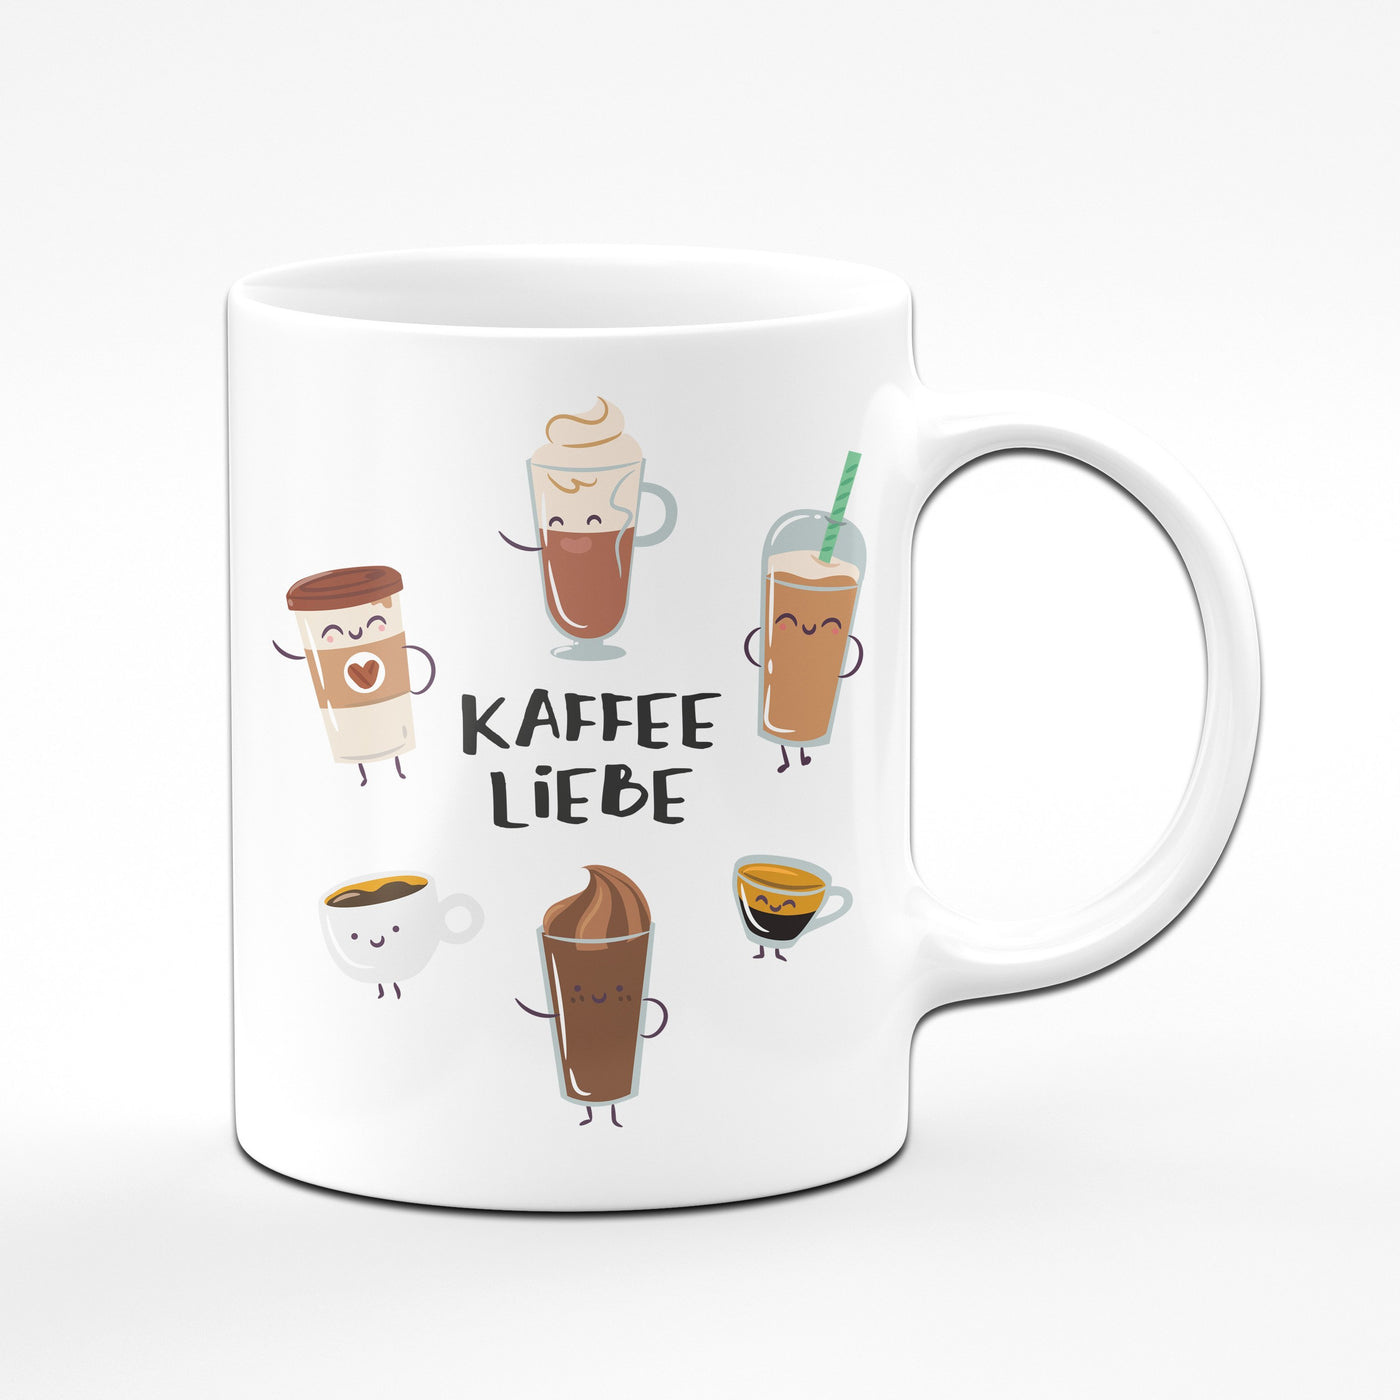 Bild: Tasse - Kaffee Liebe Kaffeesorten Geschenkidee